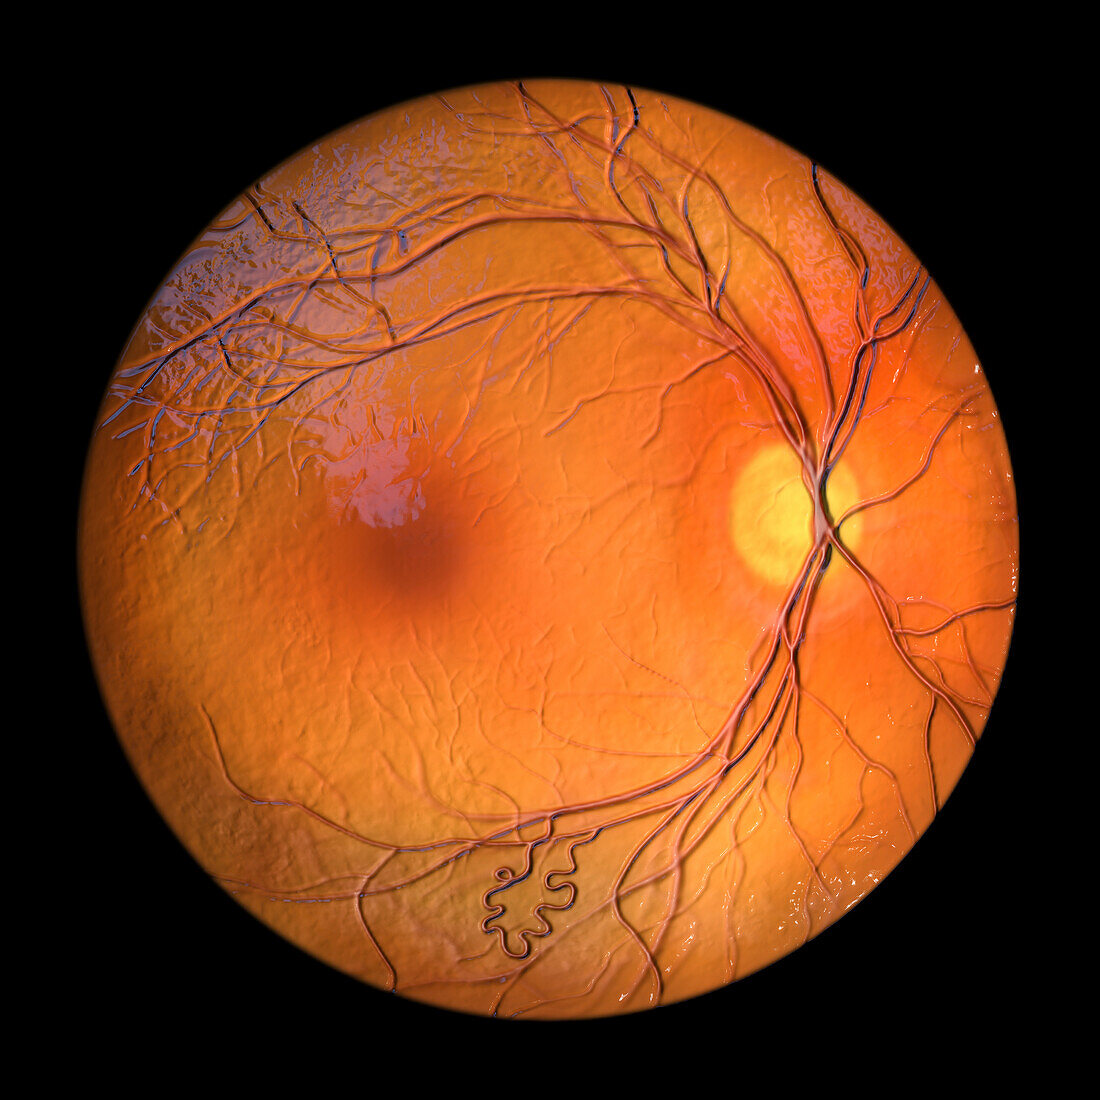 Retinal arteriovenous malformation, illustration